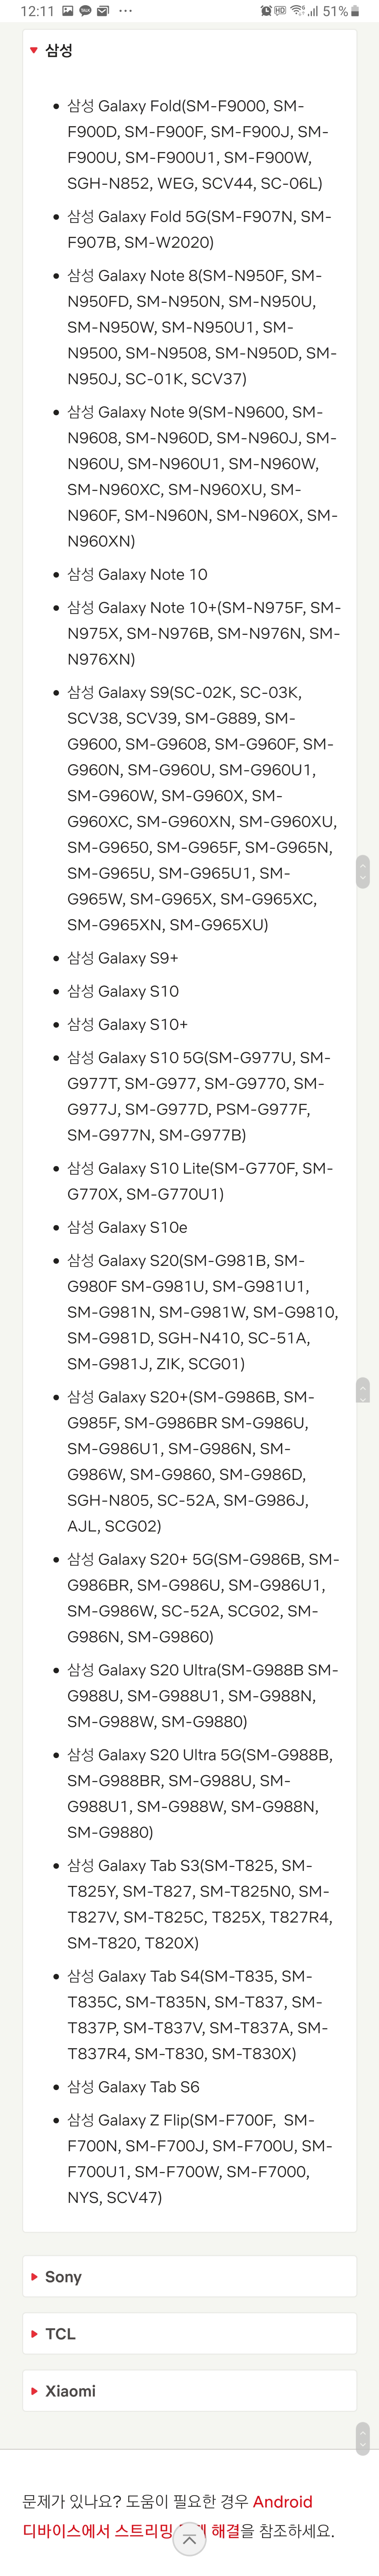 Screenshot_20200311-121147_Samsung Internet.jpg